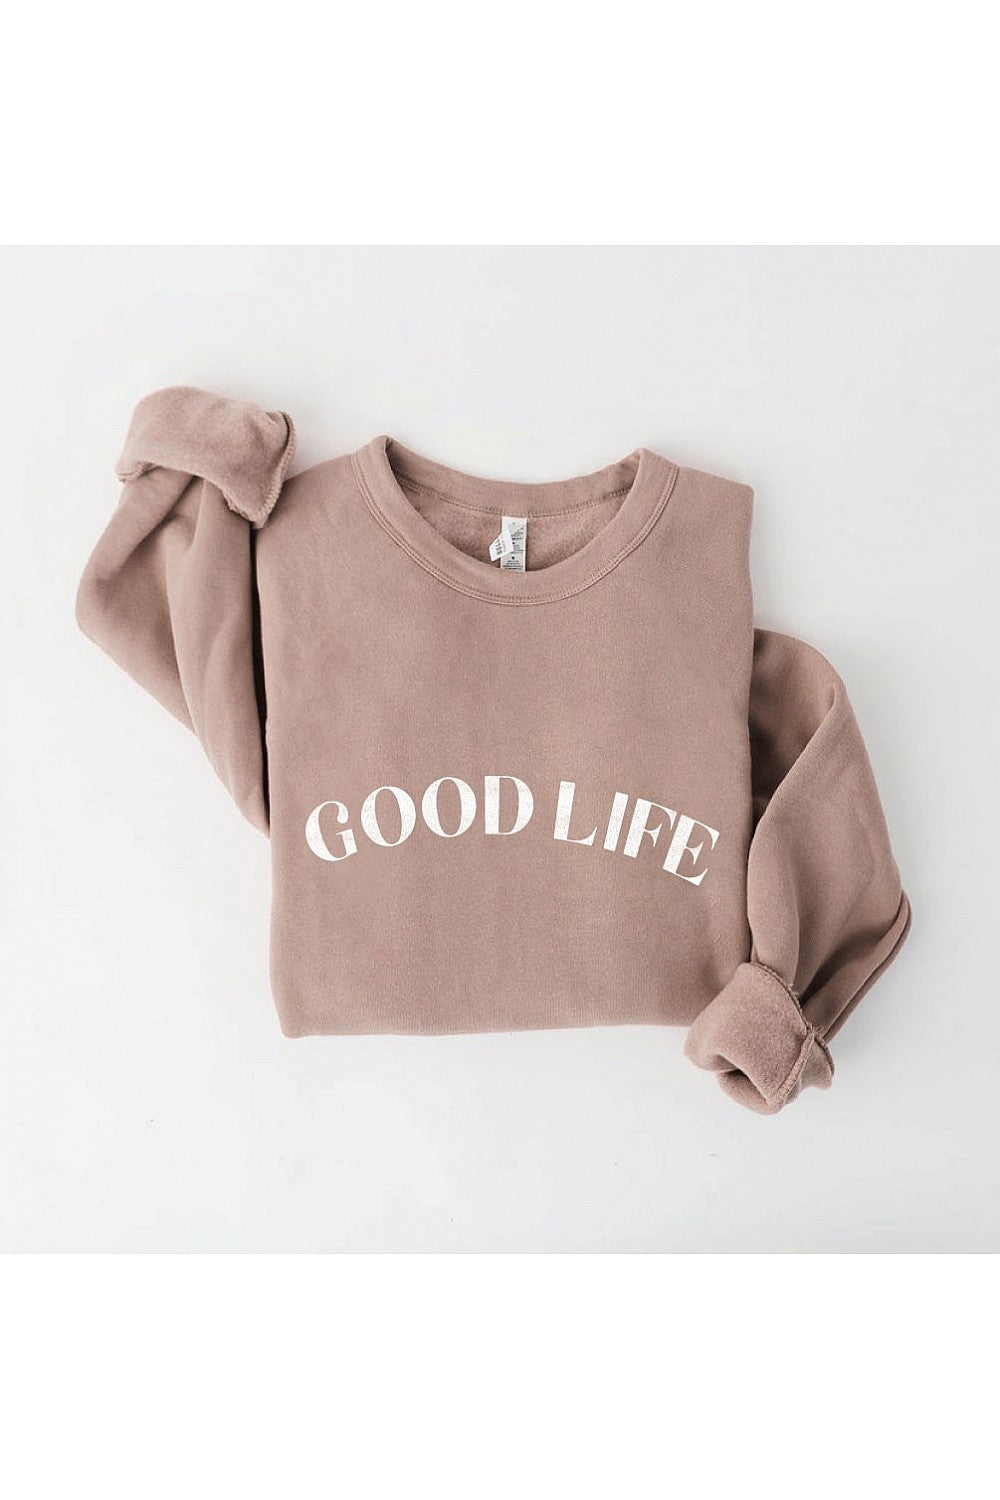 GOOD LIFE Graphic Sweatshirt